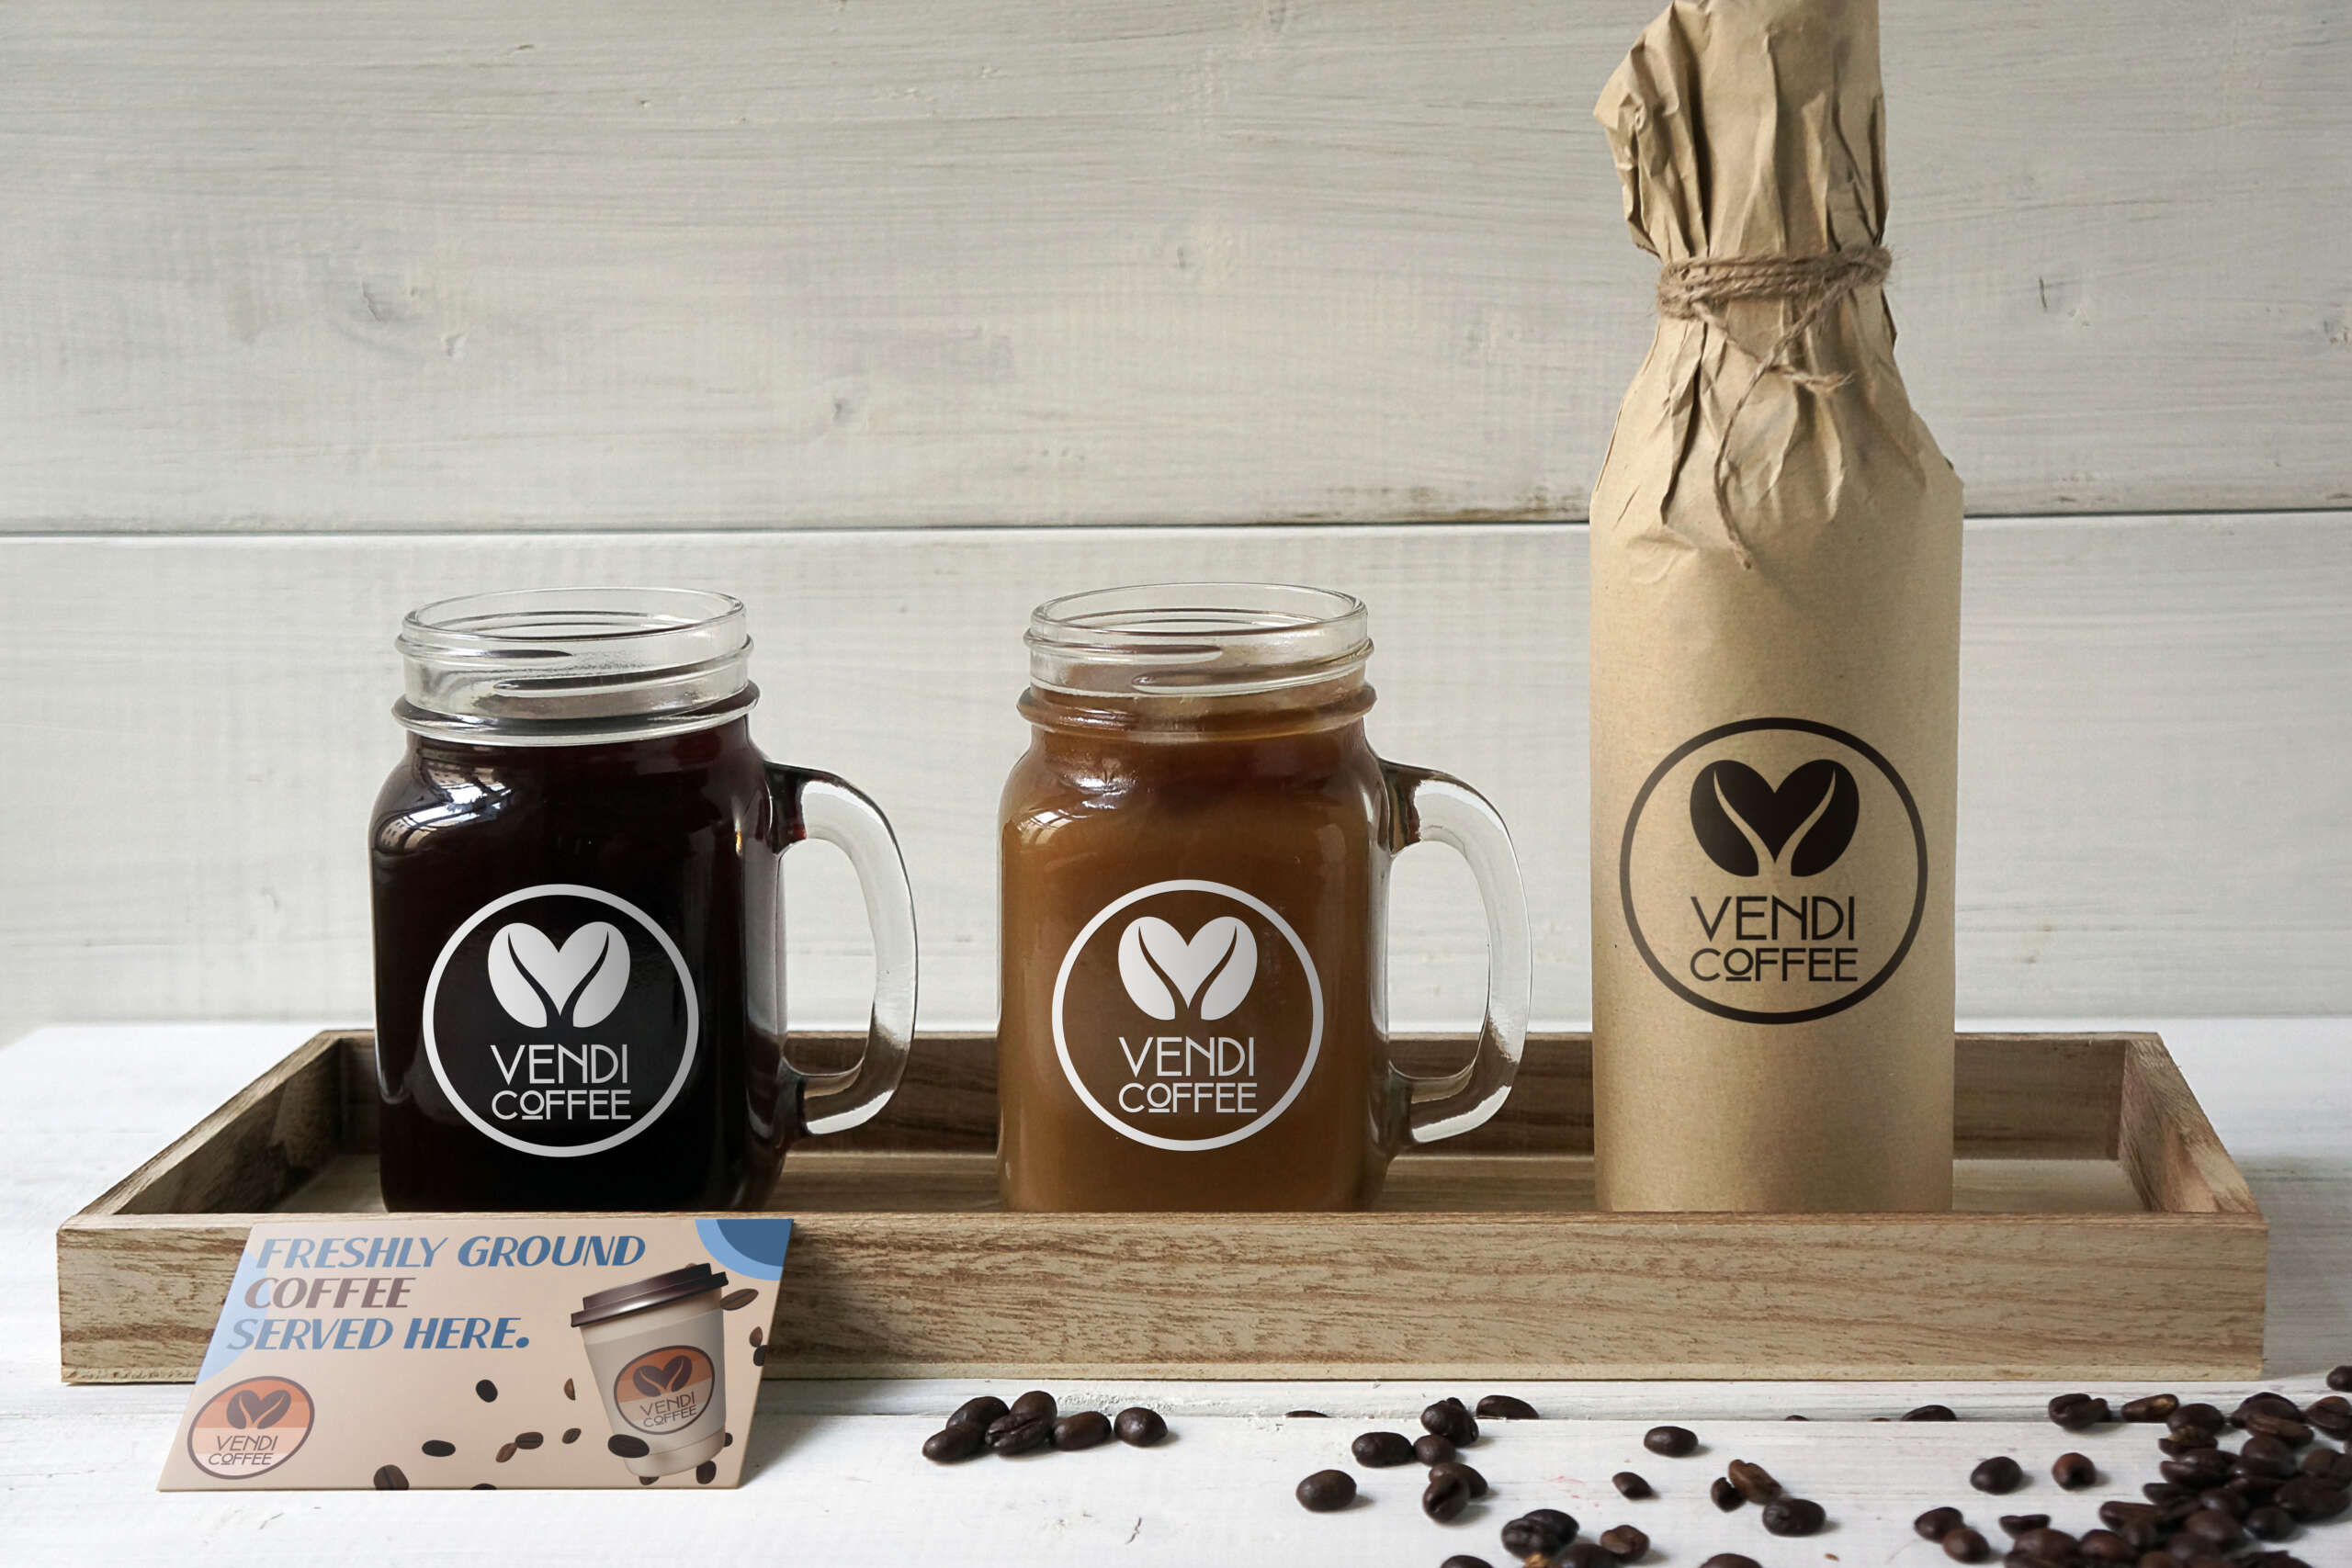 Vendi coffee logo on glass coffee mugs on a tray next to a vendi coffee card